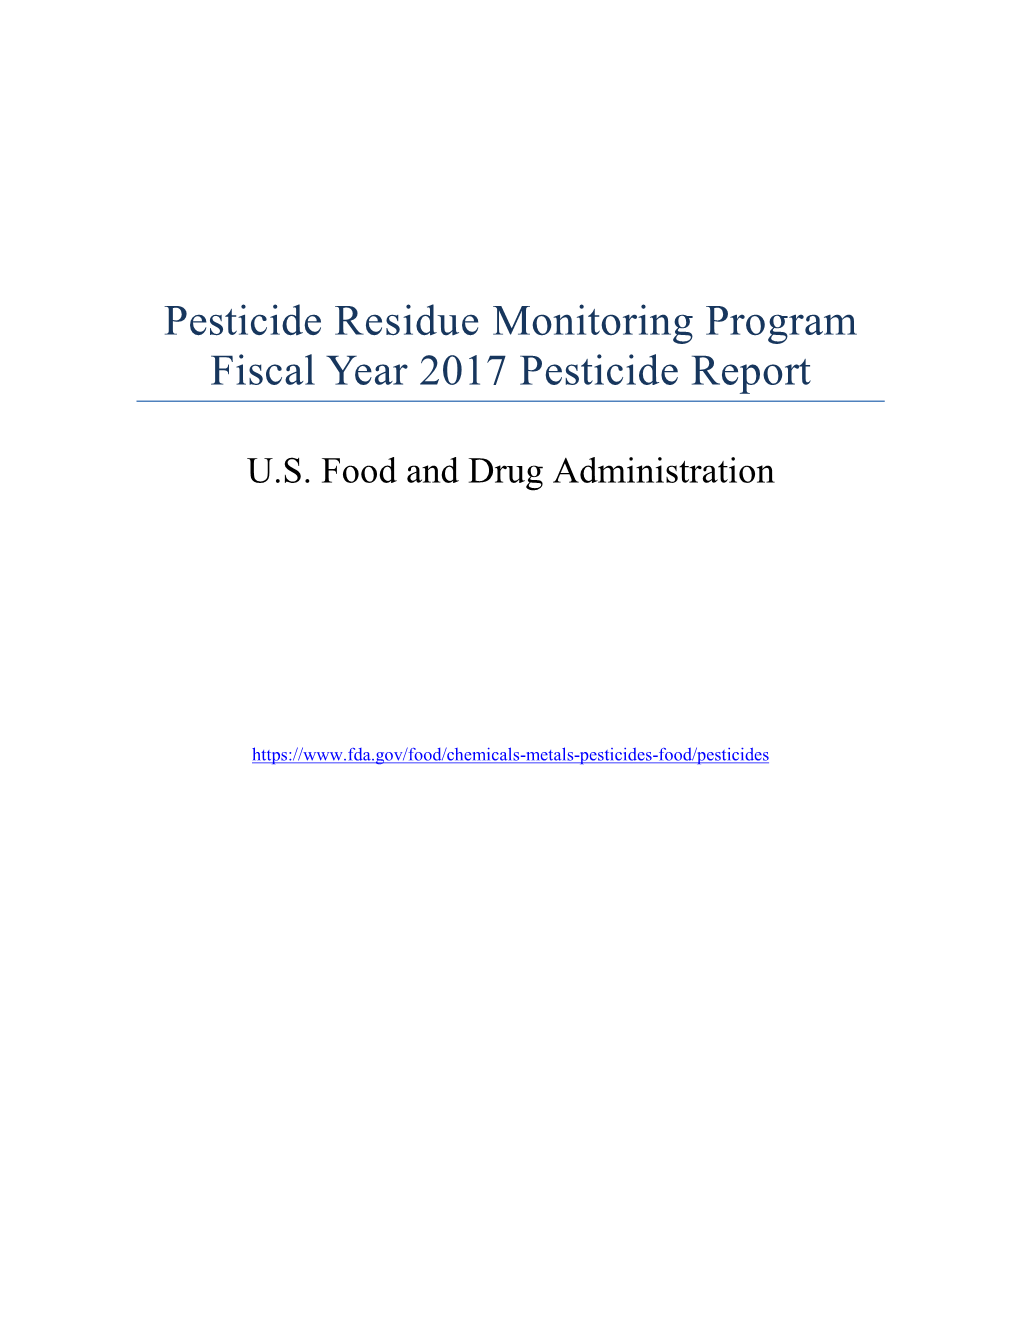 FDA Pesticide Residue Monitoring Program Reports and Data